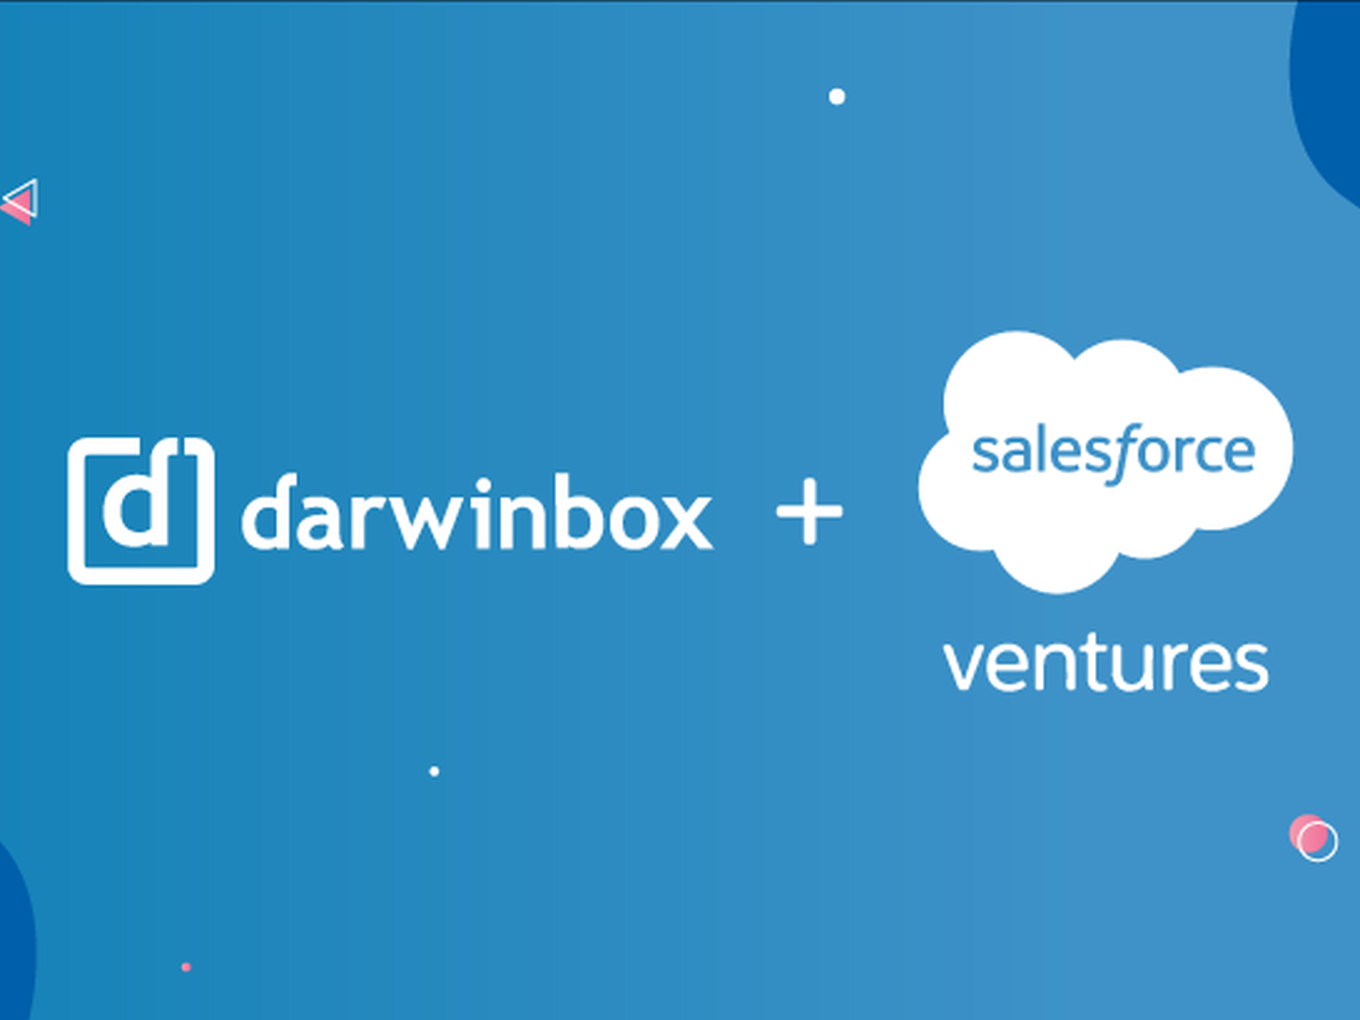 darwinbox-funding-salesforce-feature